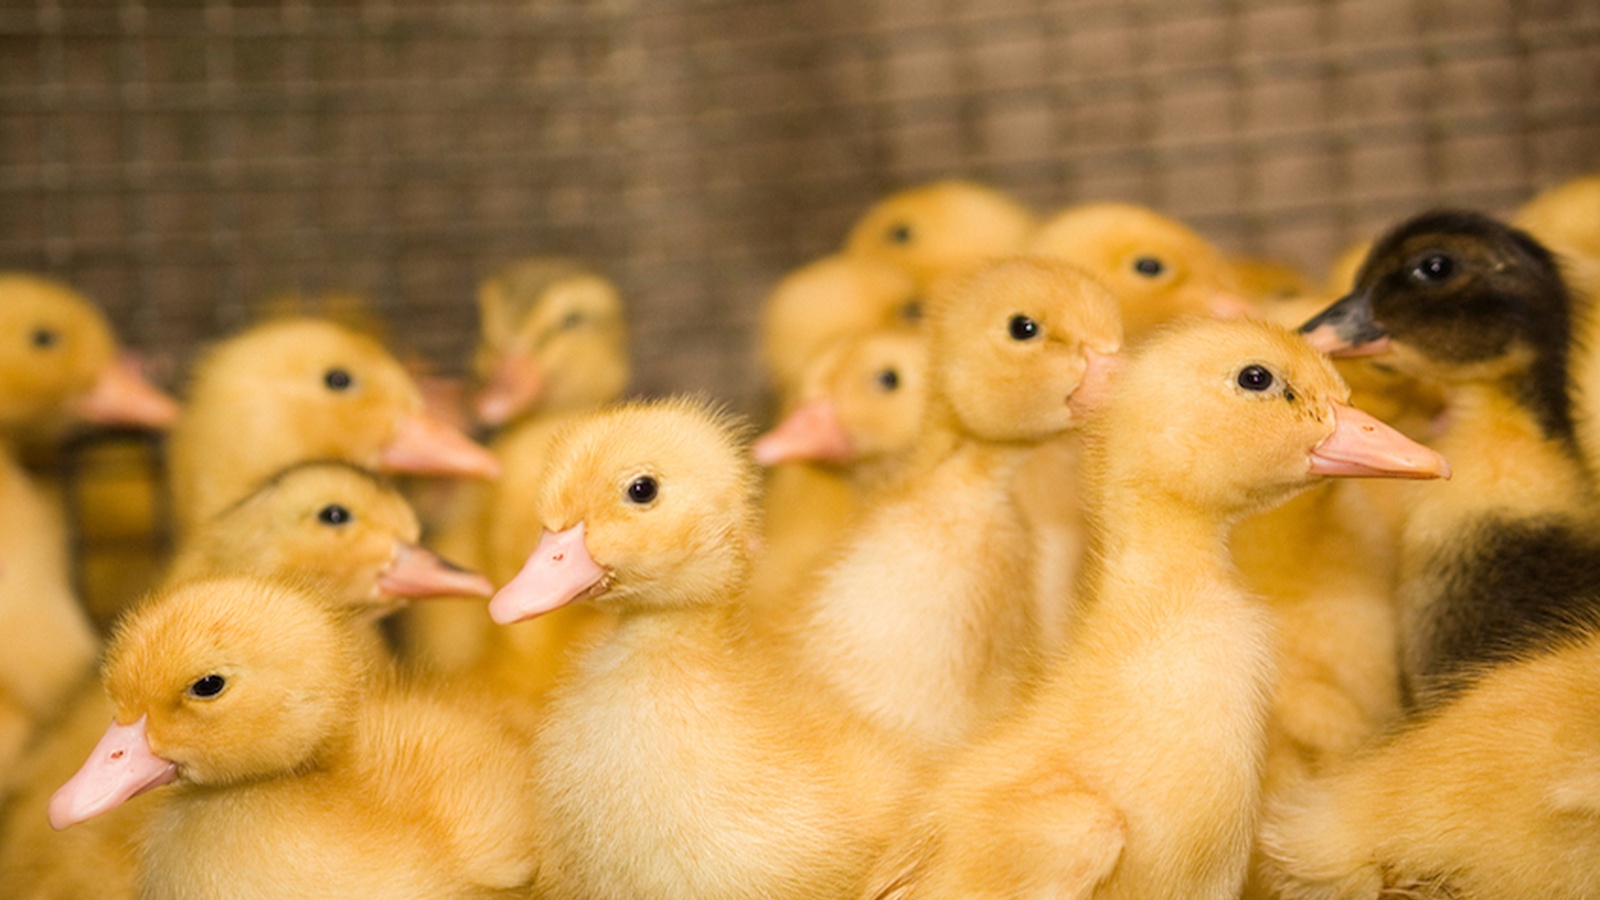 Duck Farm Cruelty Exposed